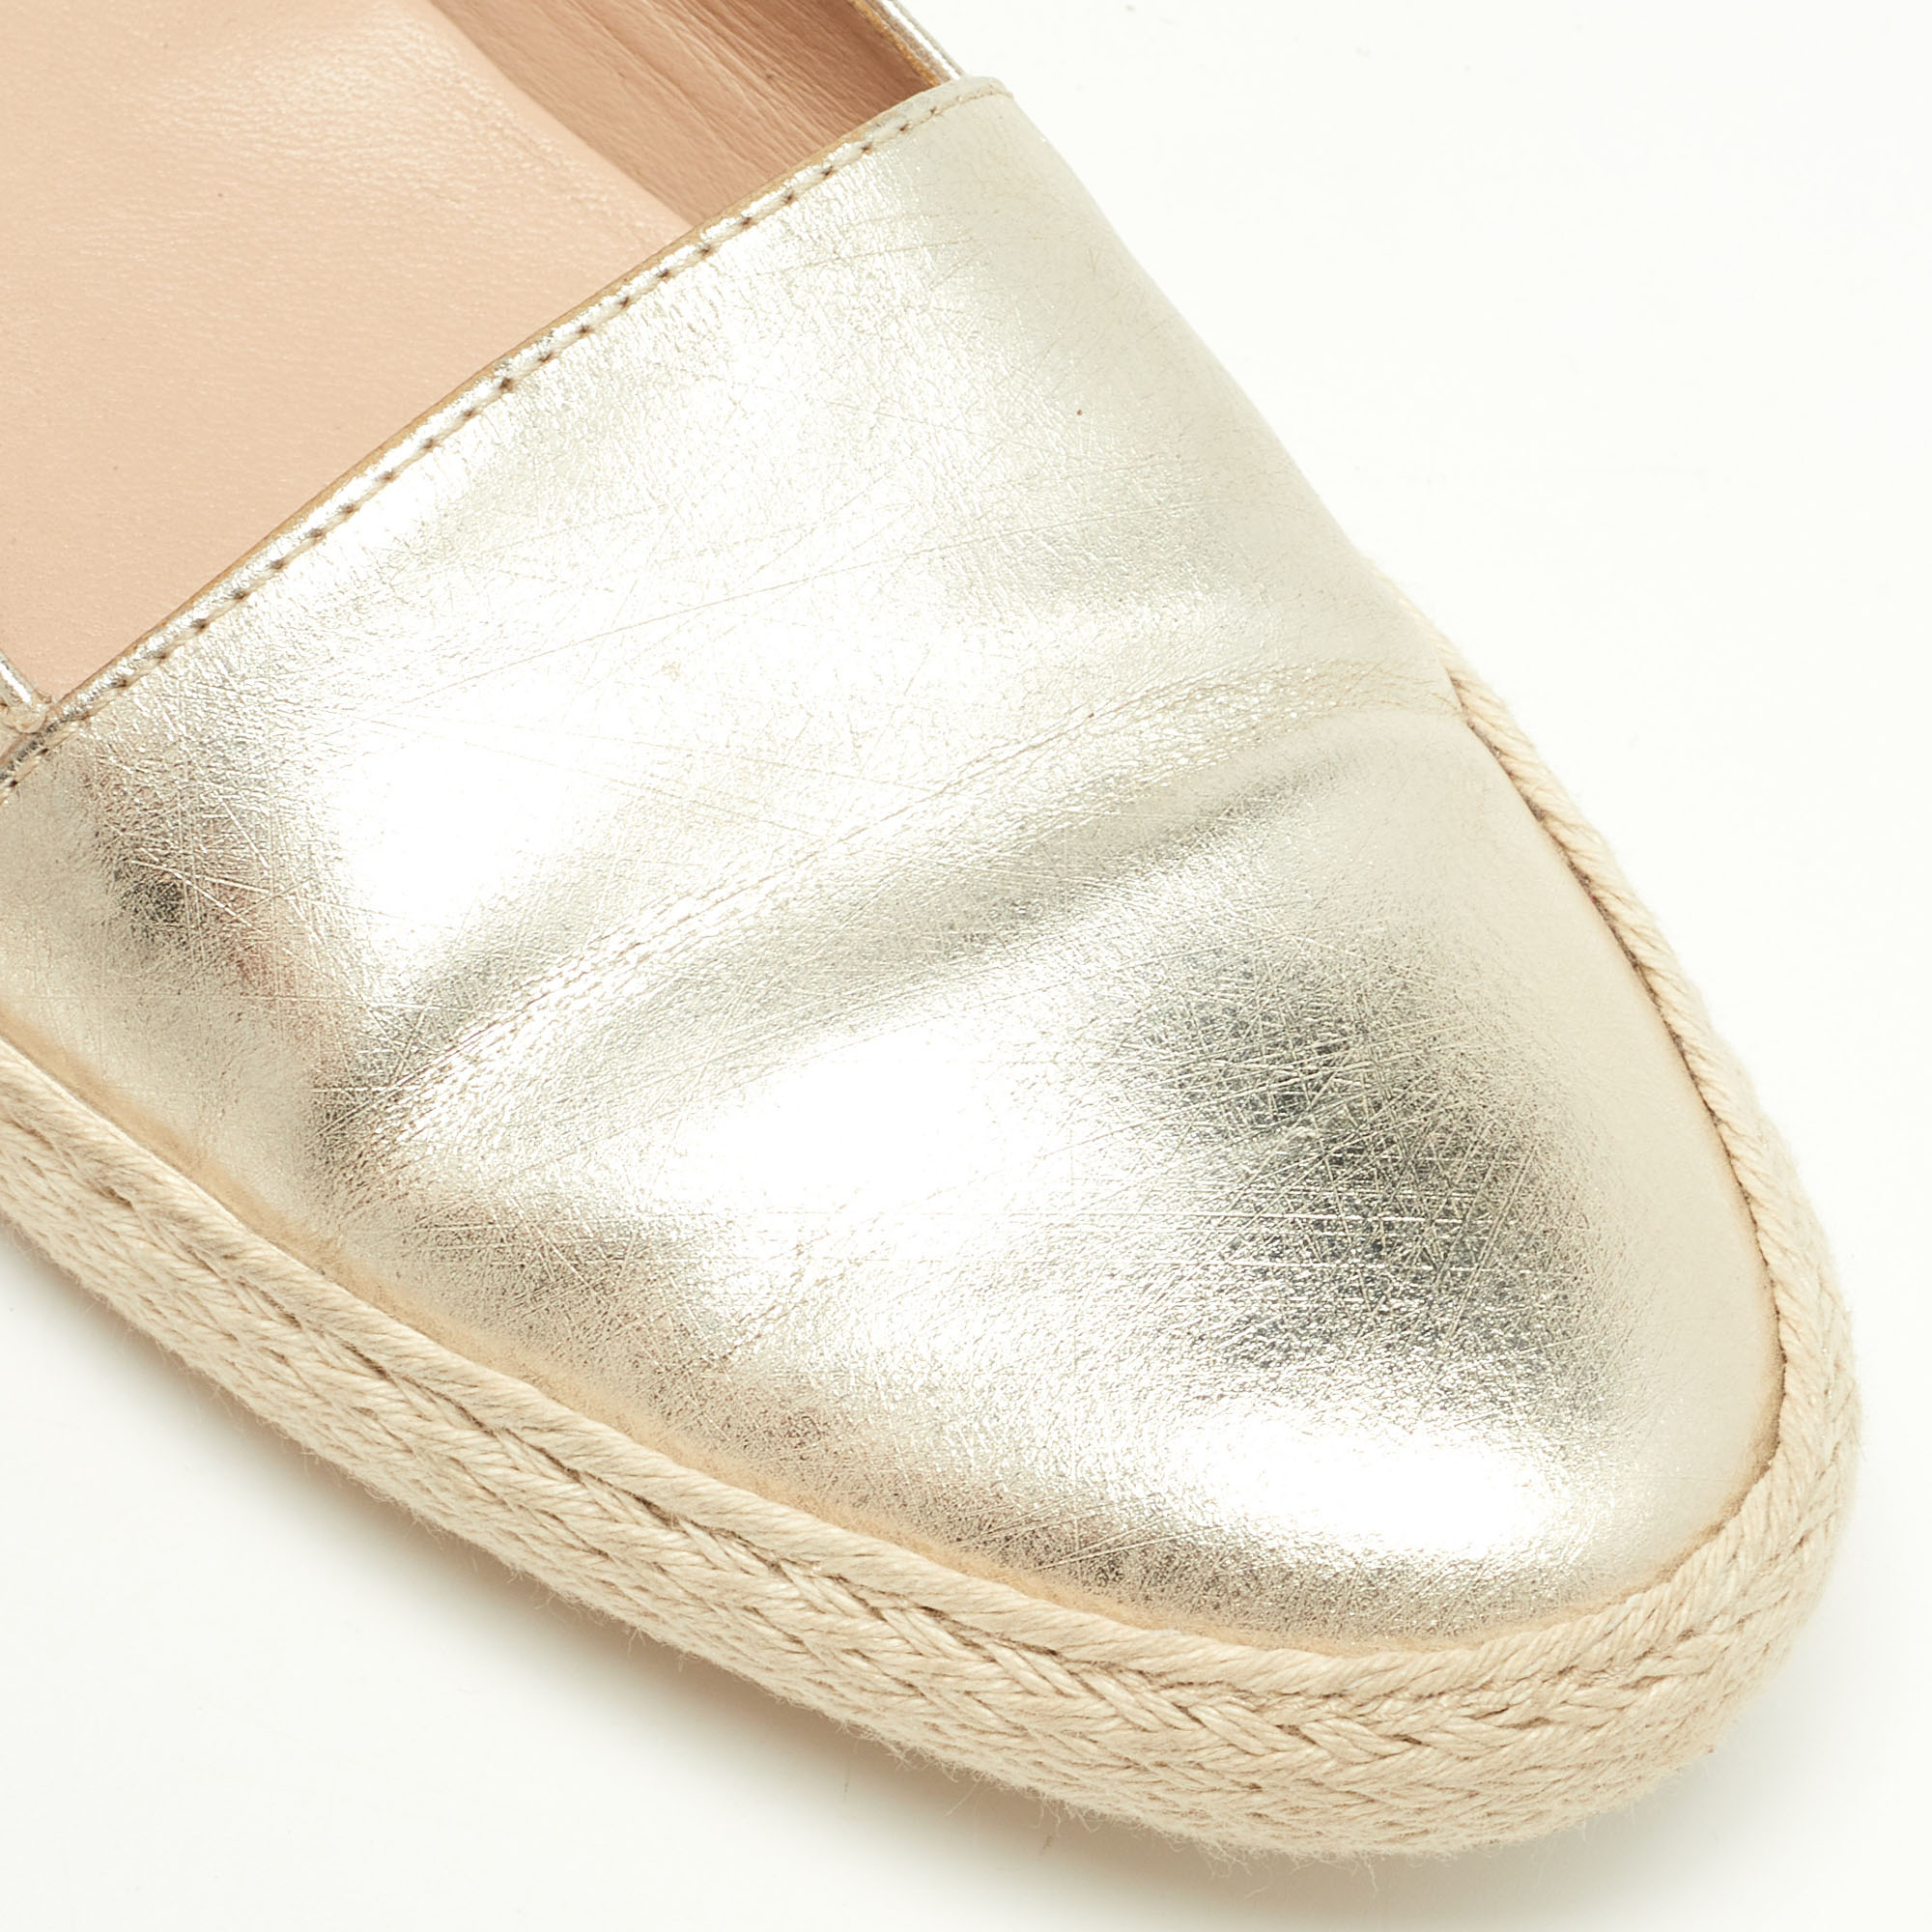 Tod's Metallic Gold Leather Pantofola Espadrille Slip On Sneakers Size 35